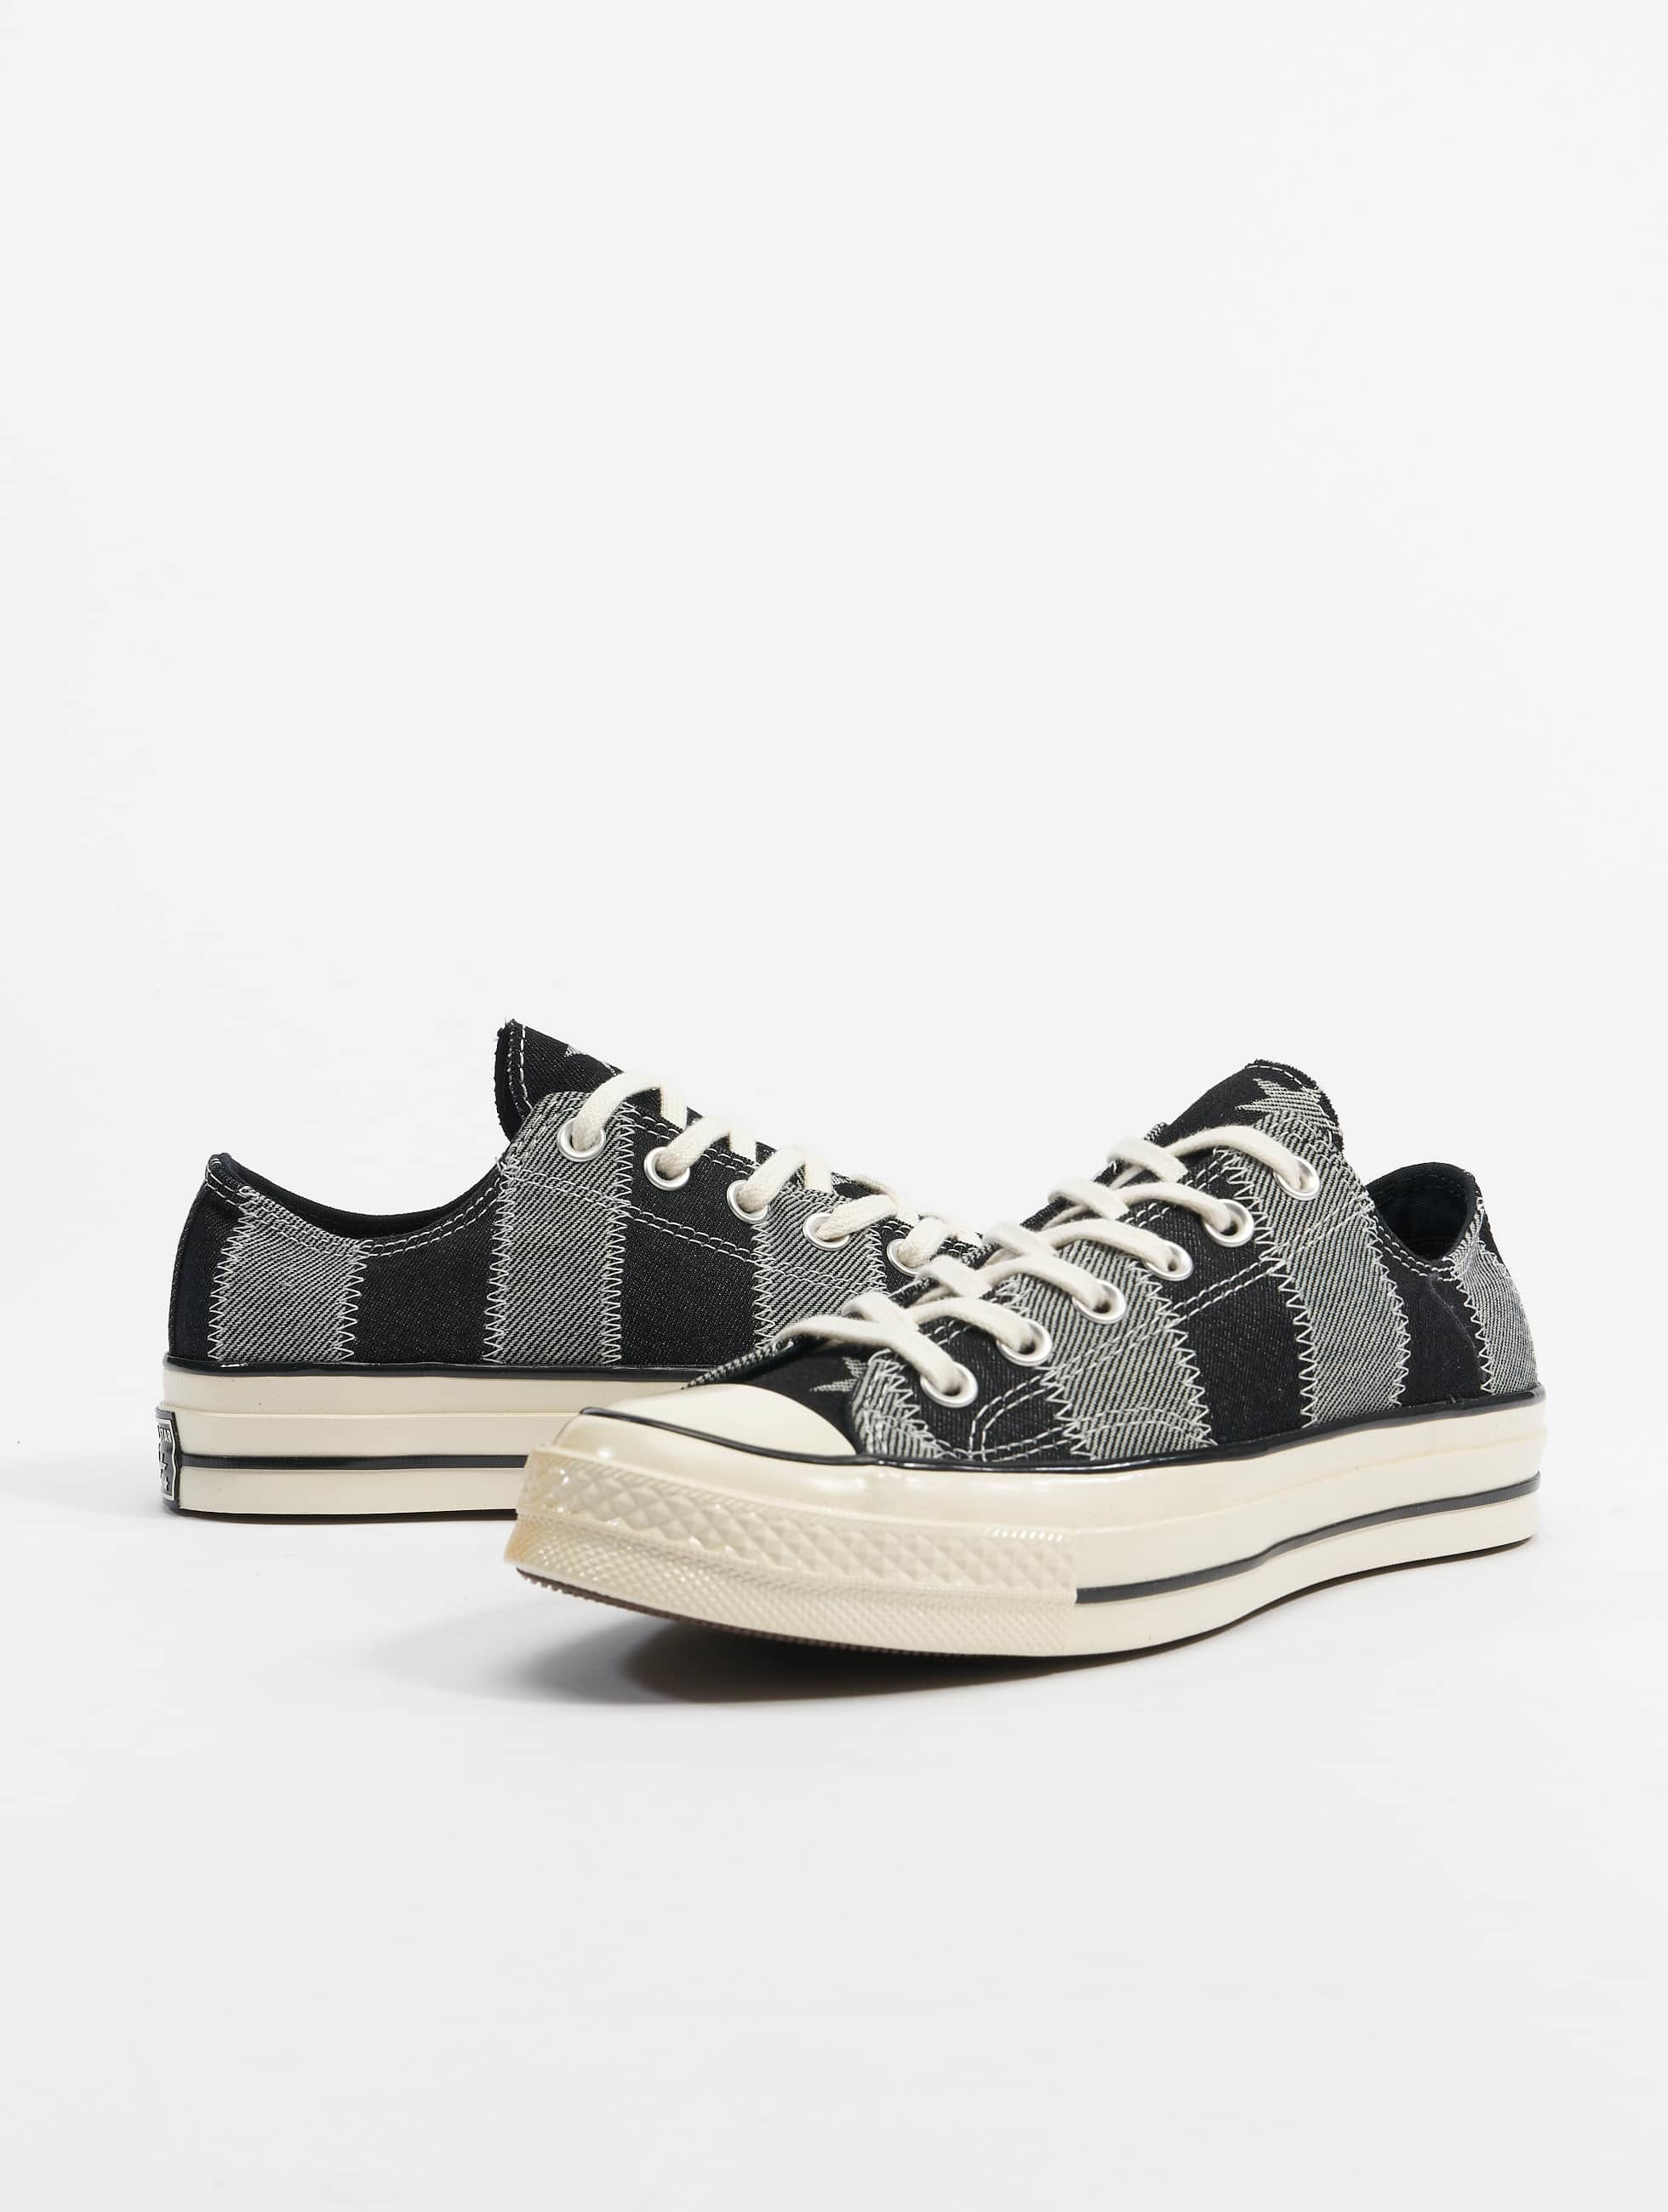 Converse Shoe / Sneakers in black 973281